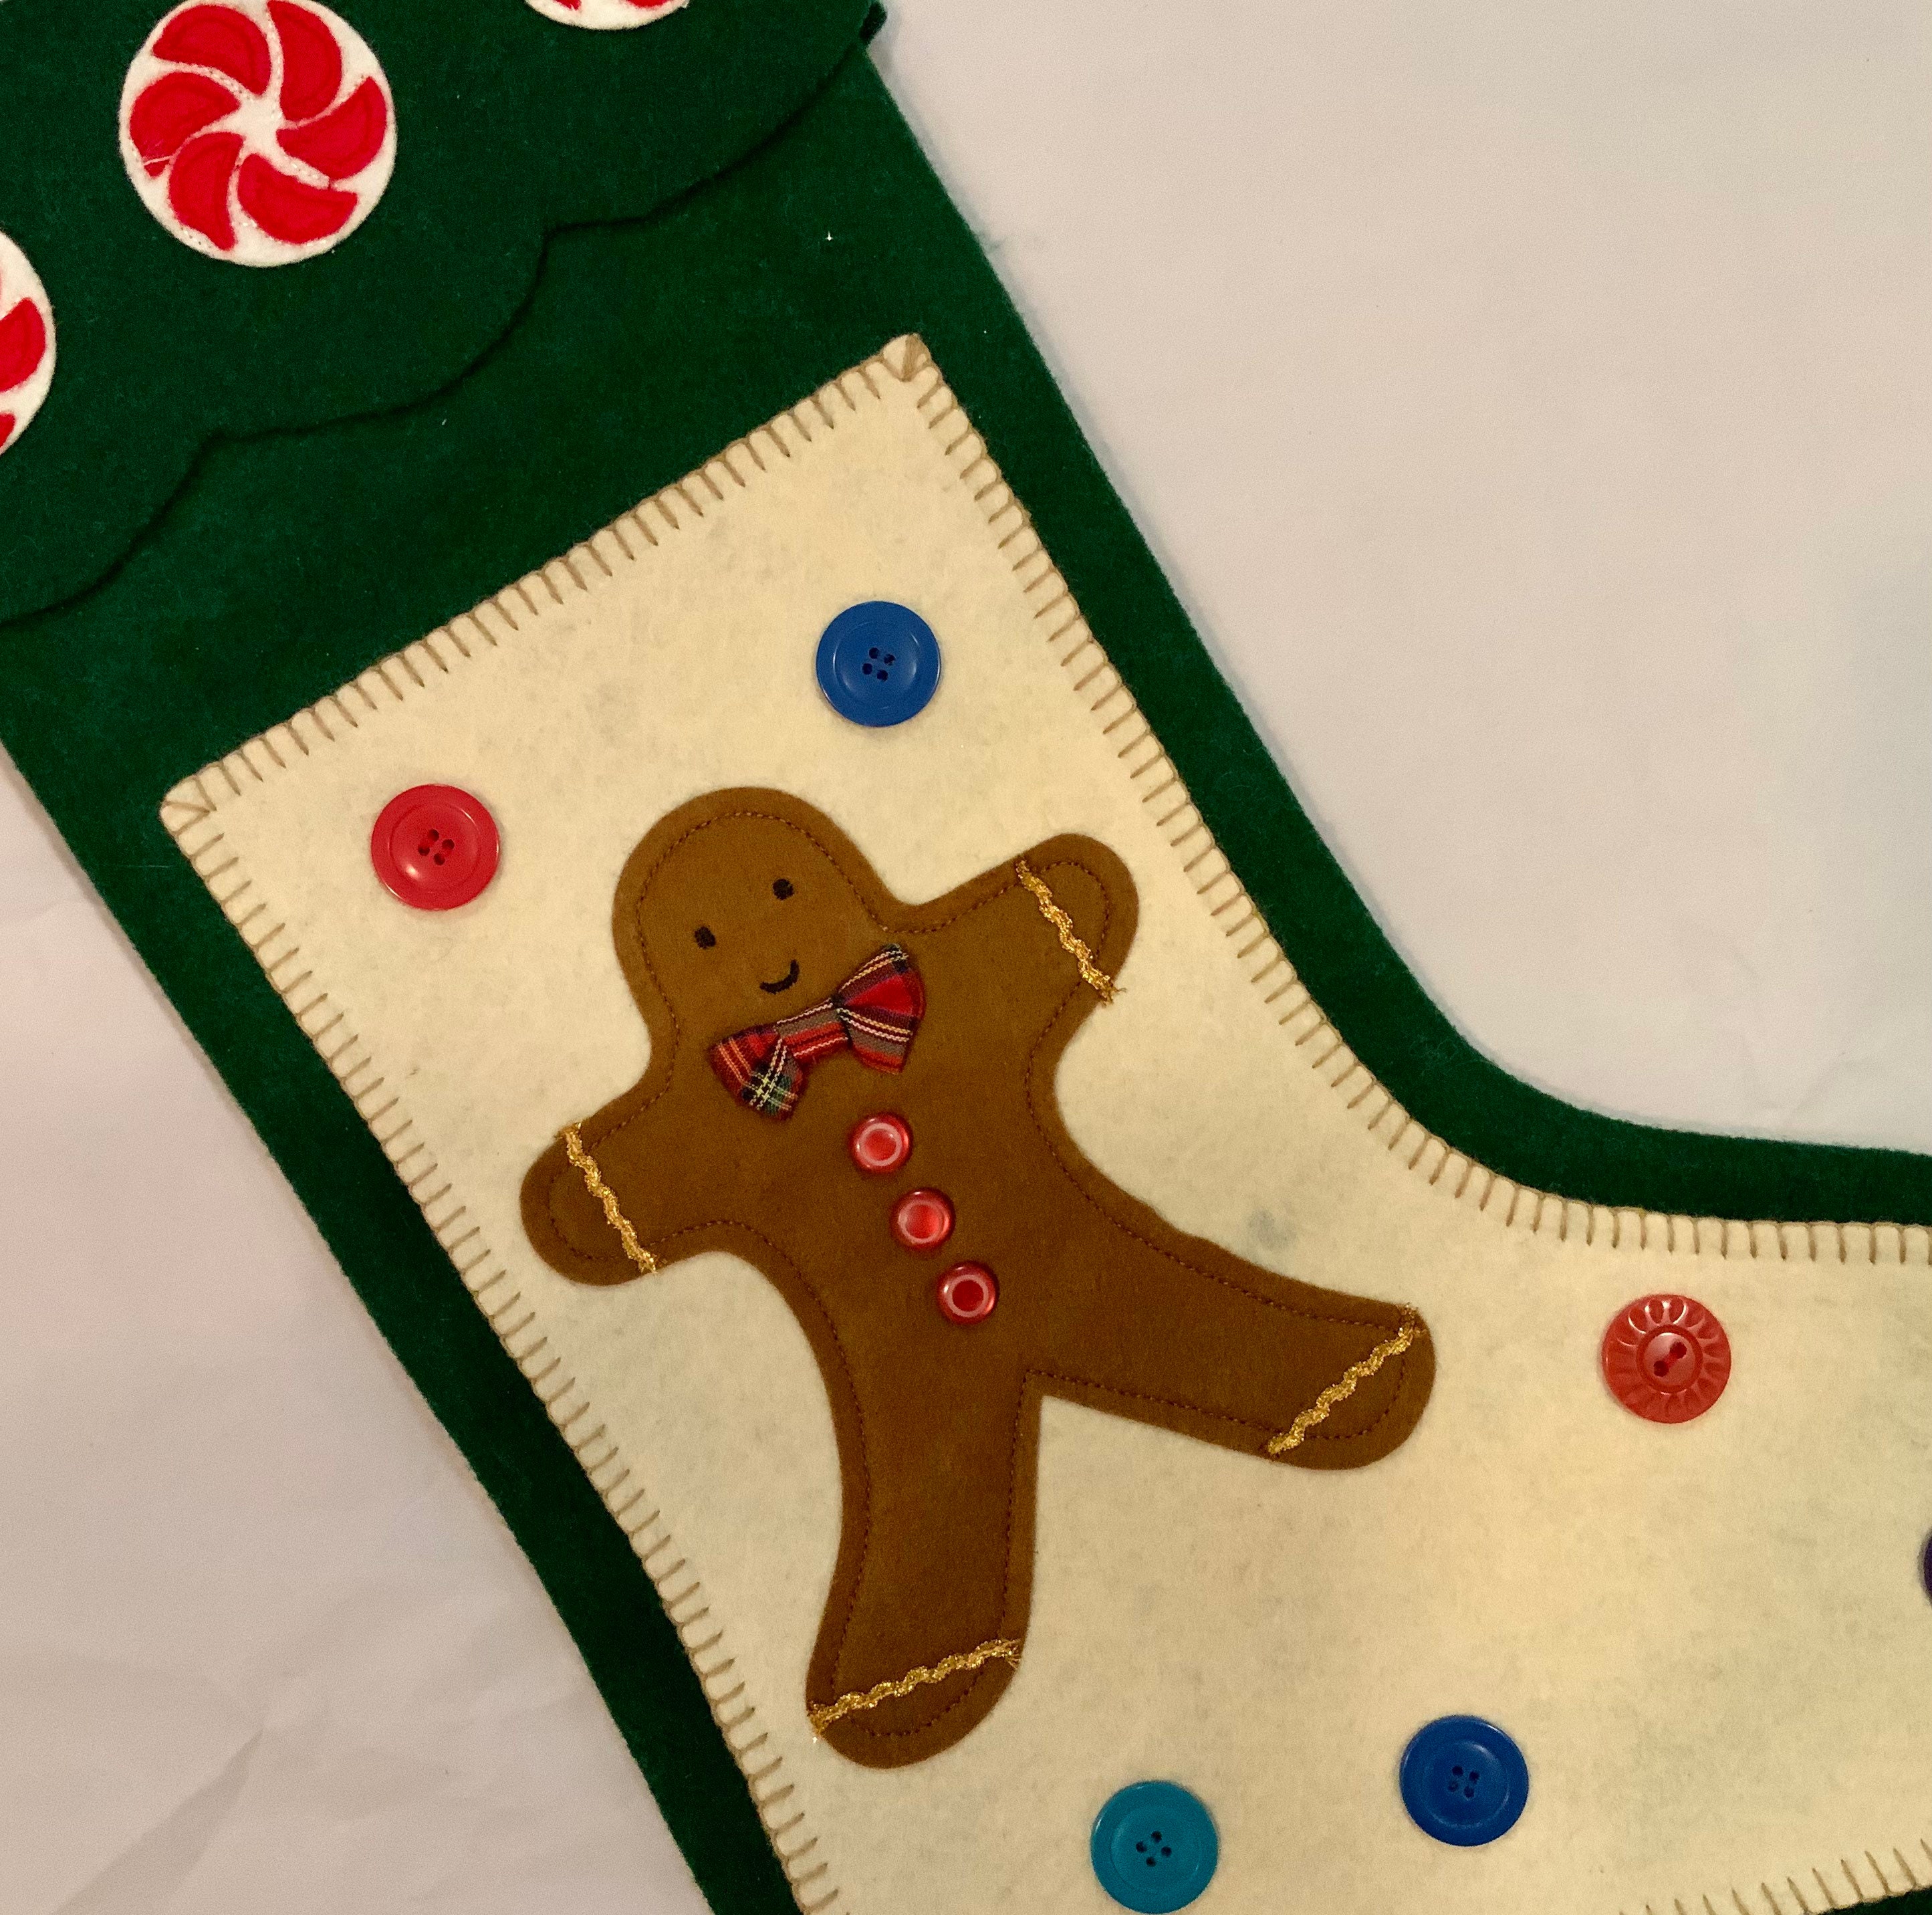 19 Inch Hanging Christmas Stocking Kits Felt Applique Classic